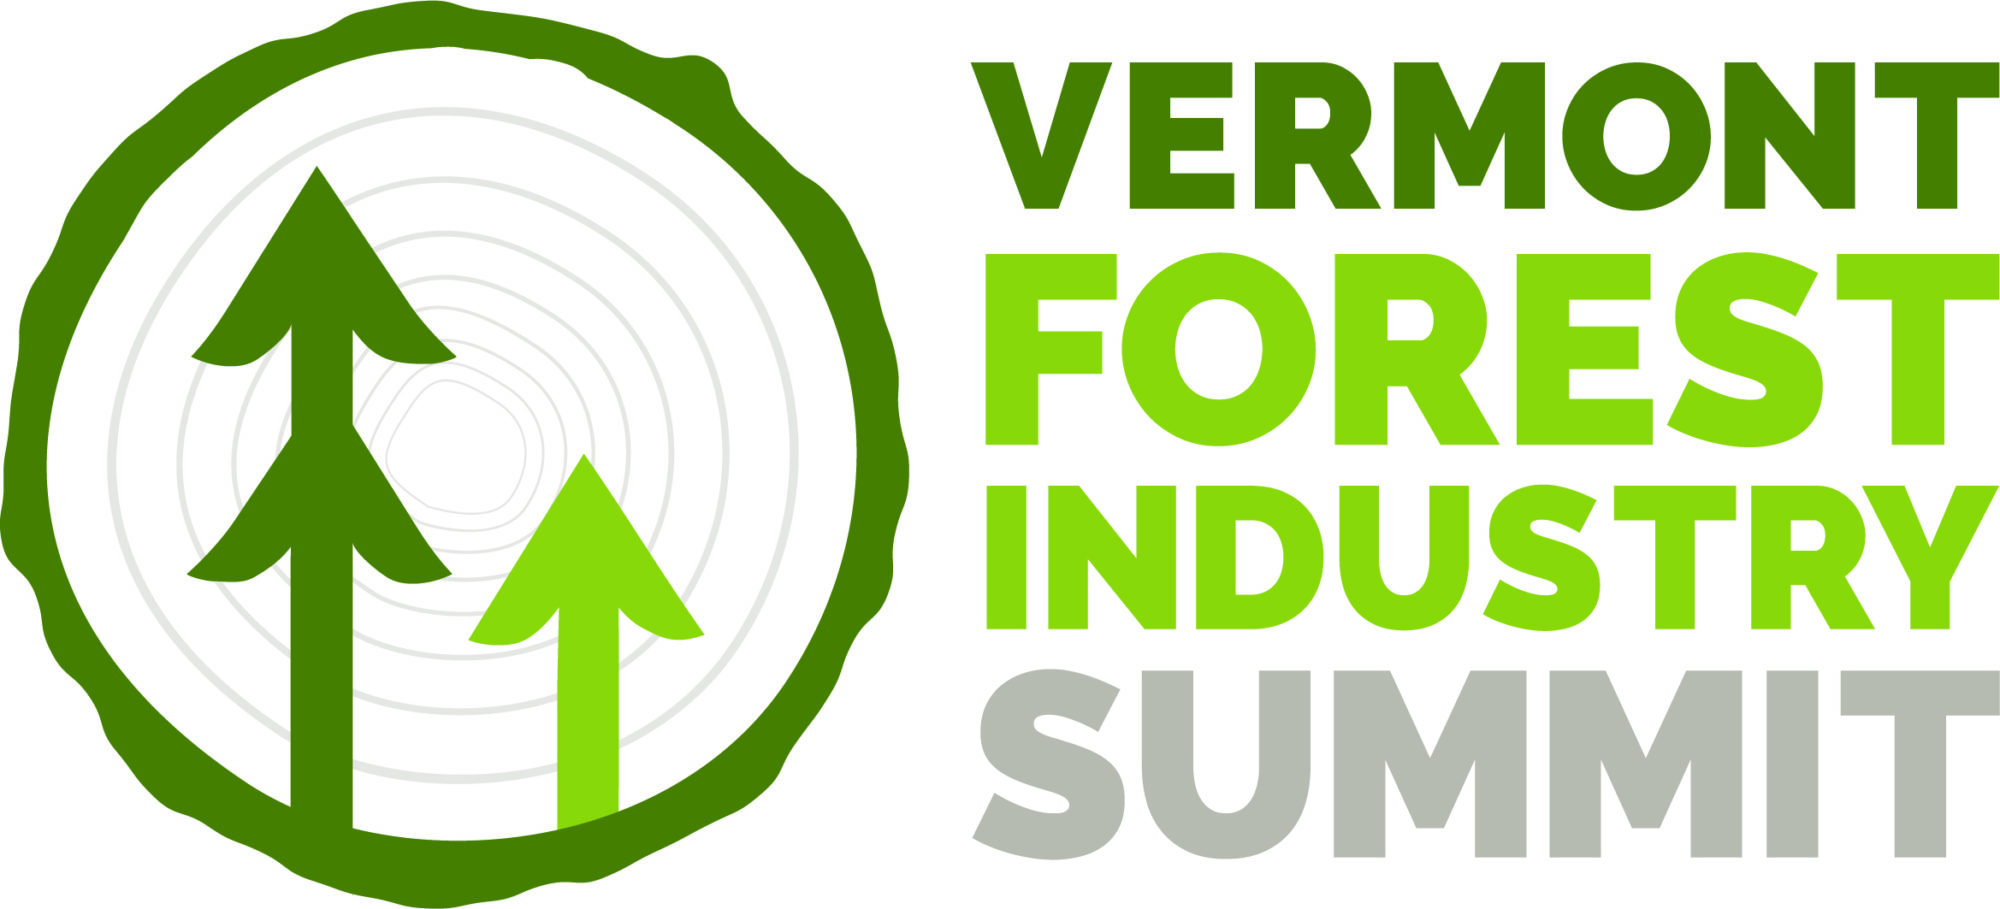 Vermont Forest Industry Summit